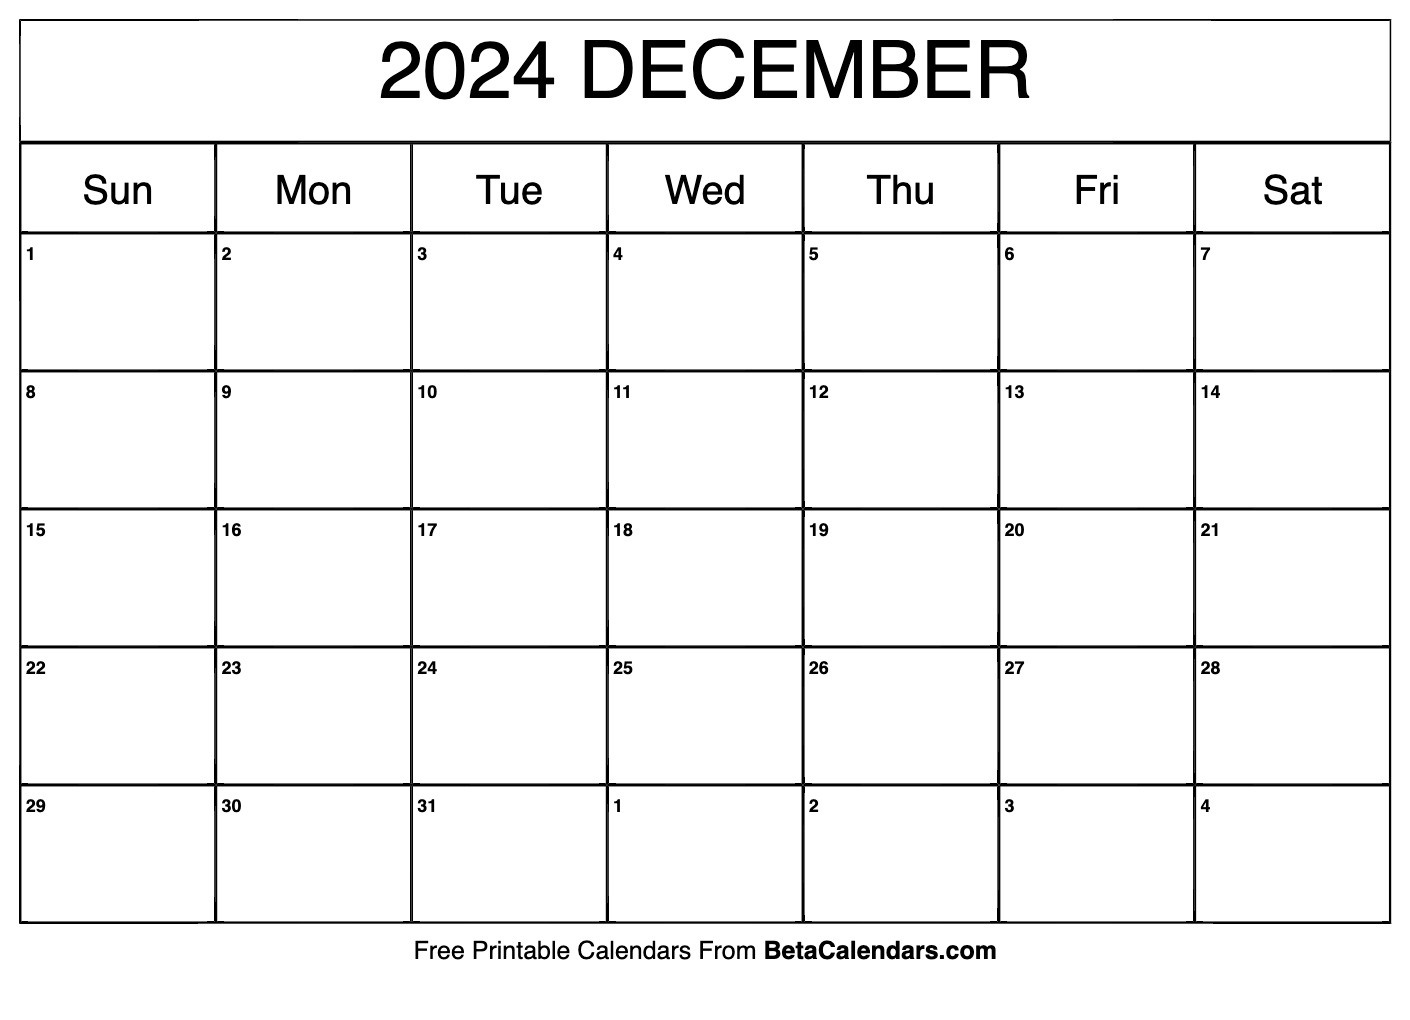 Free Printable December 2024 Calendar regarding Free Printable Calendar 2024 Dec